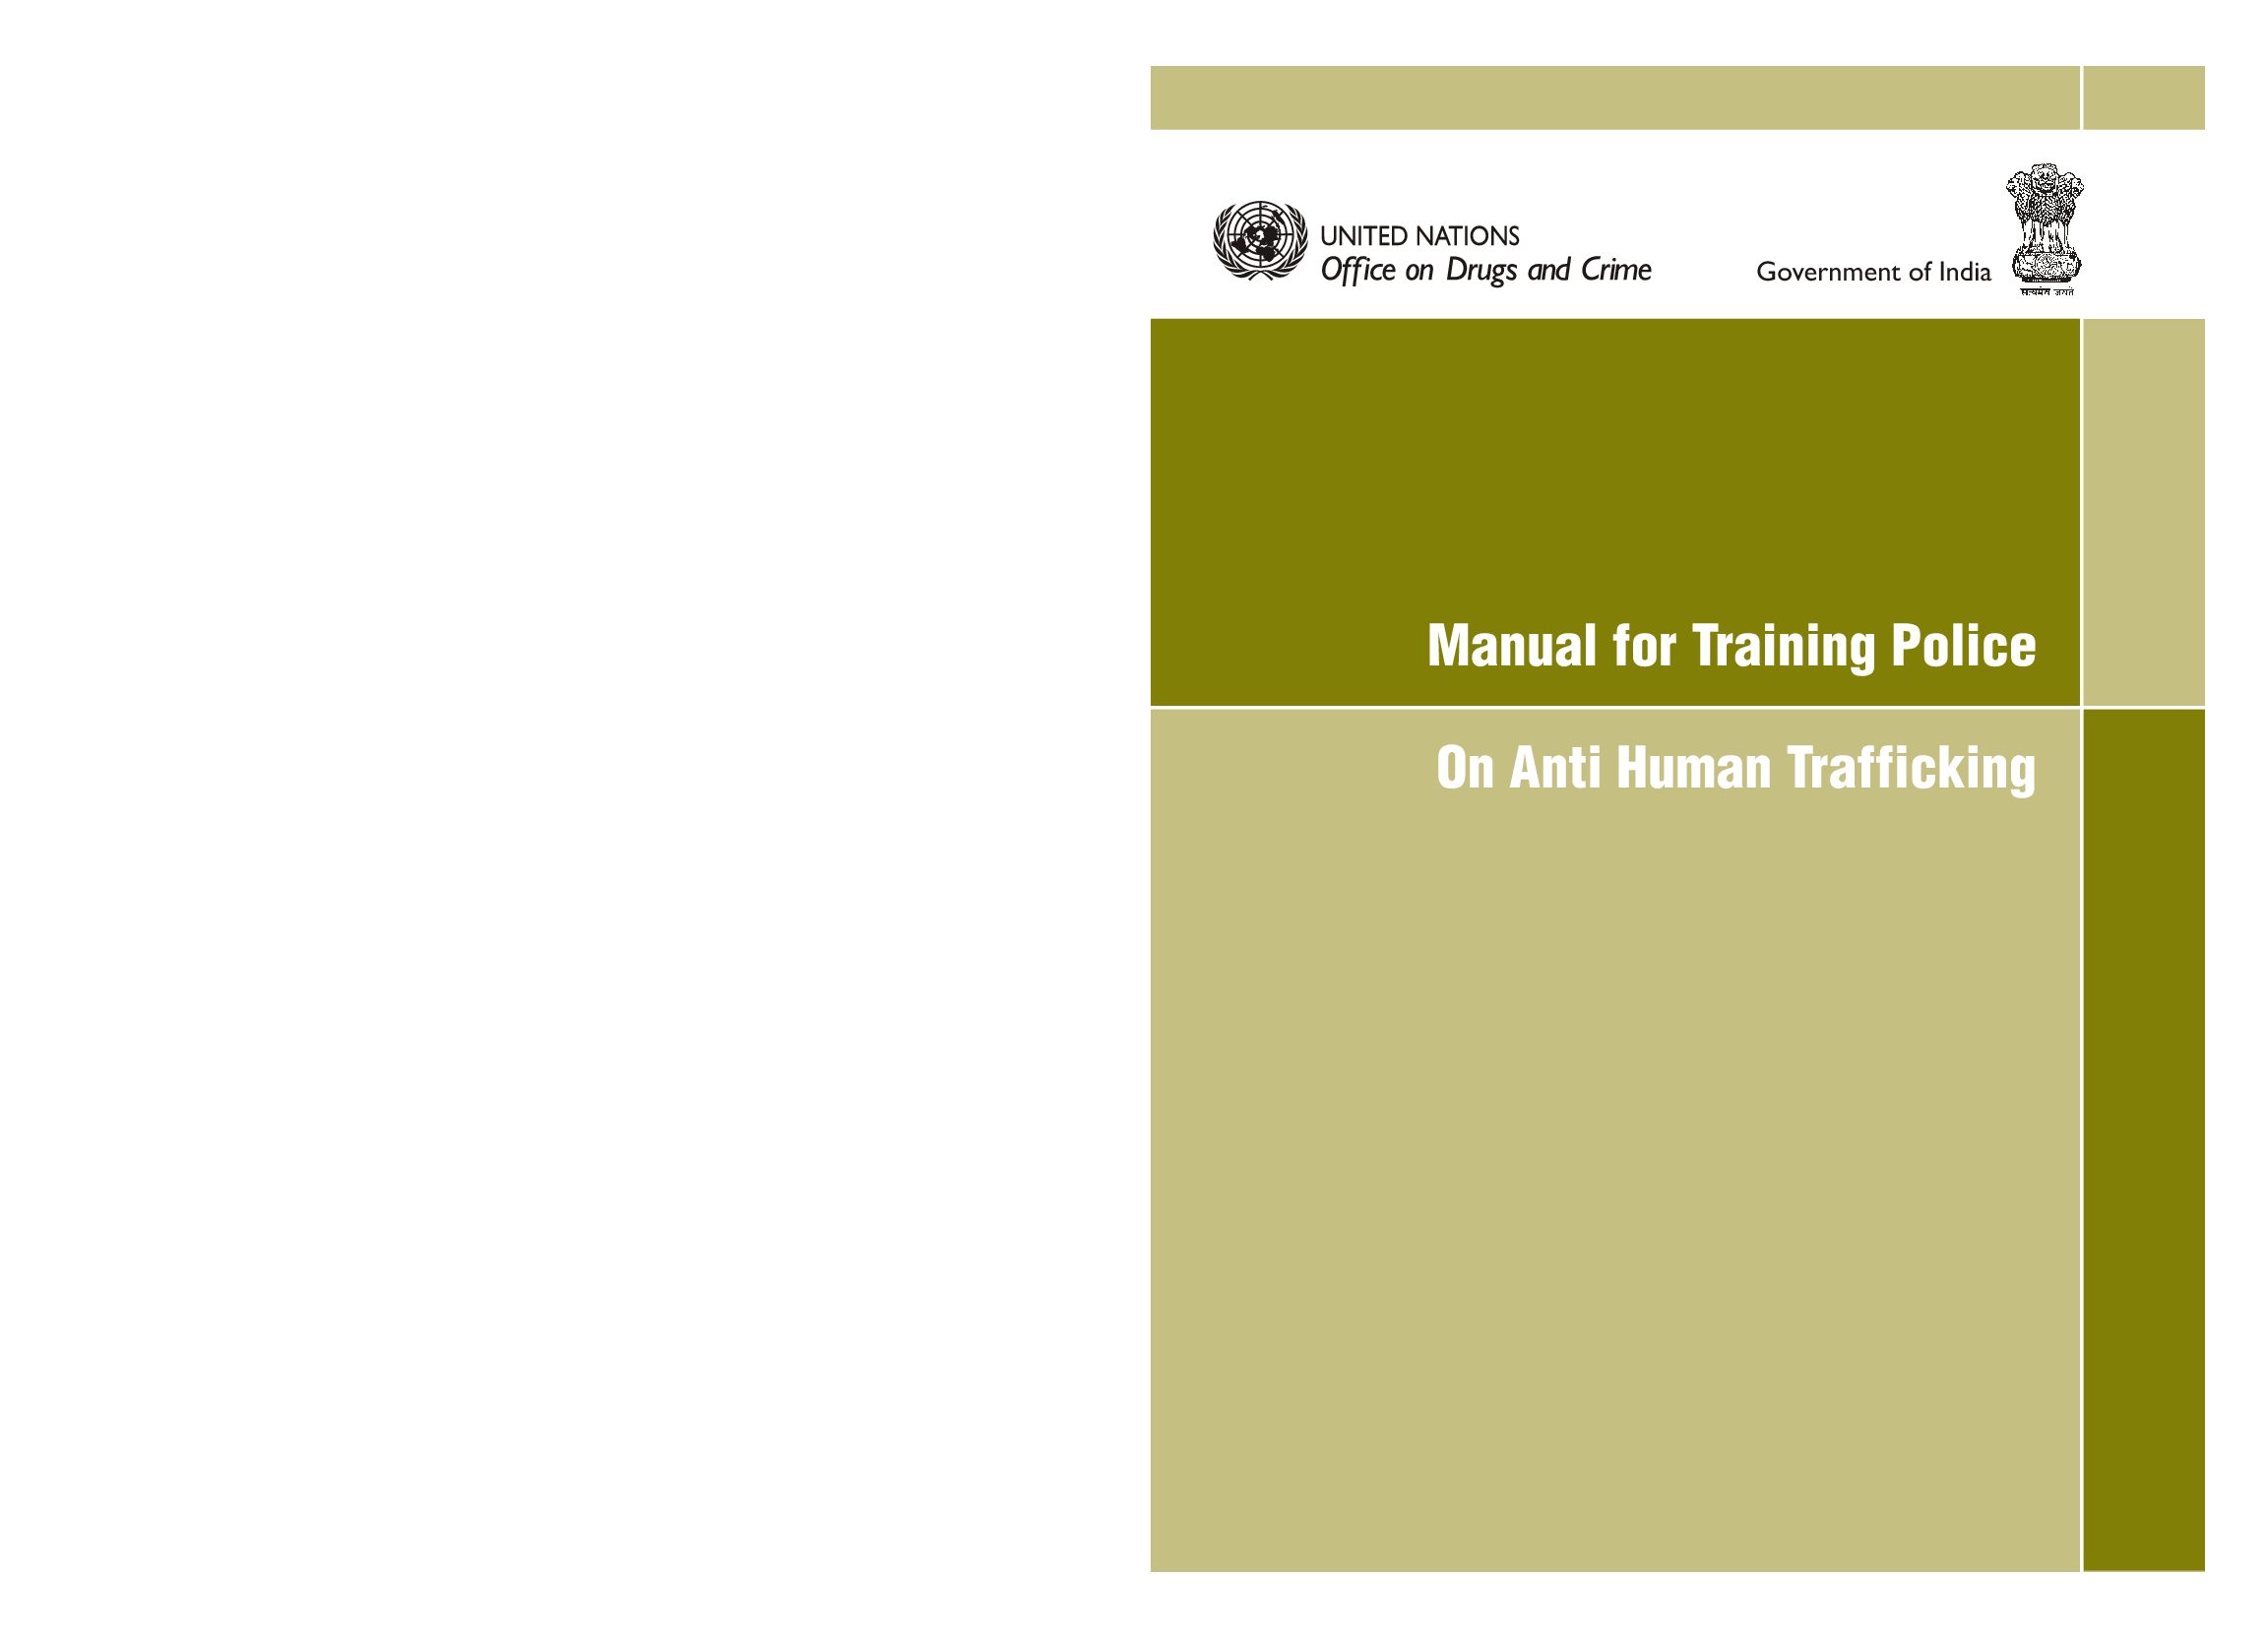 Manual for Training Police on Anti-Human Trafficking